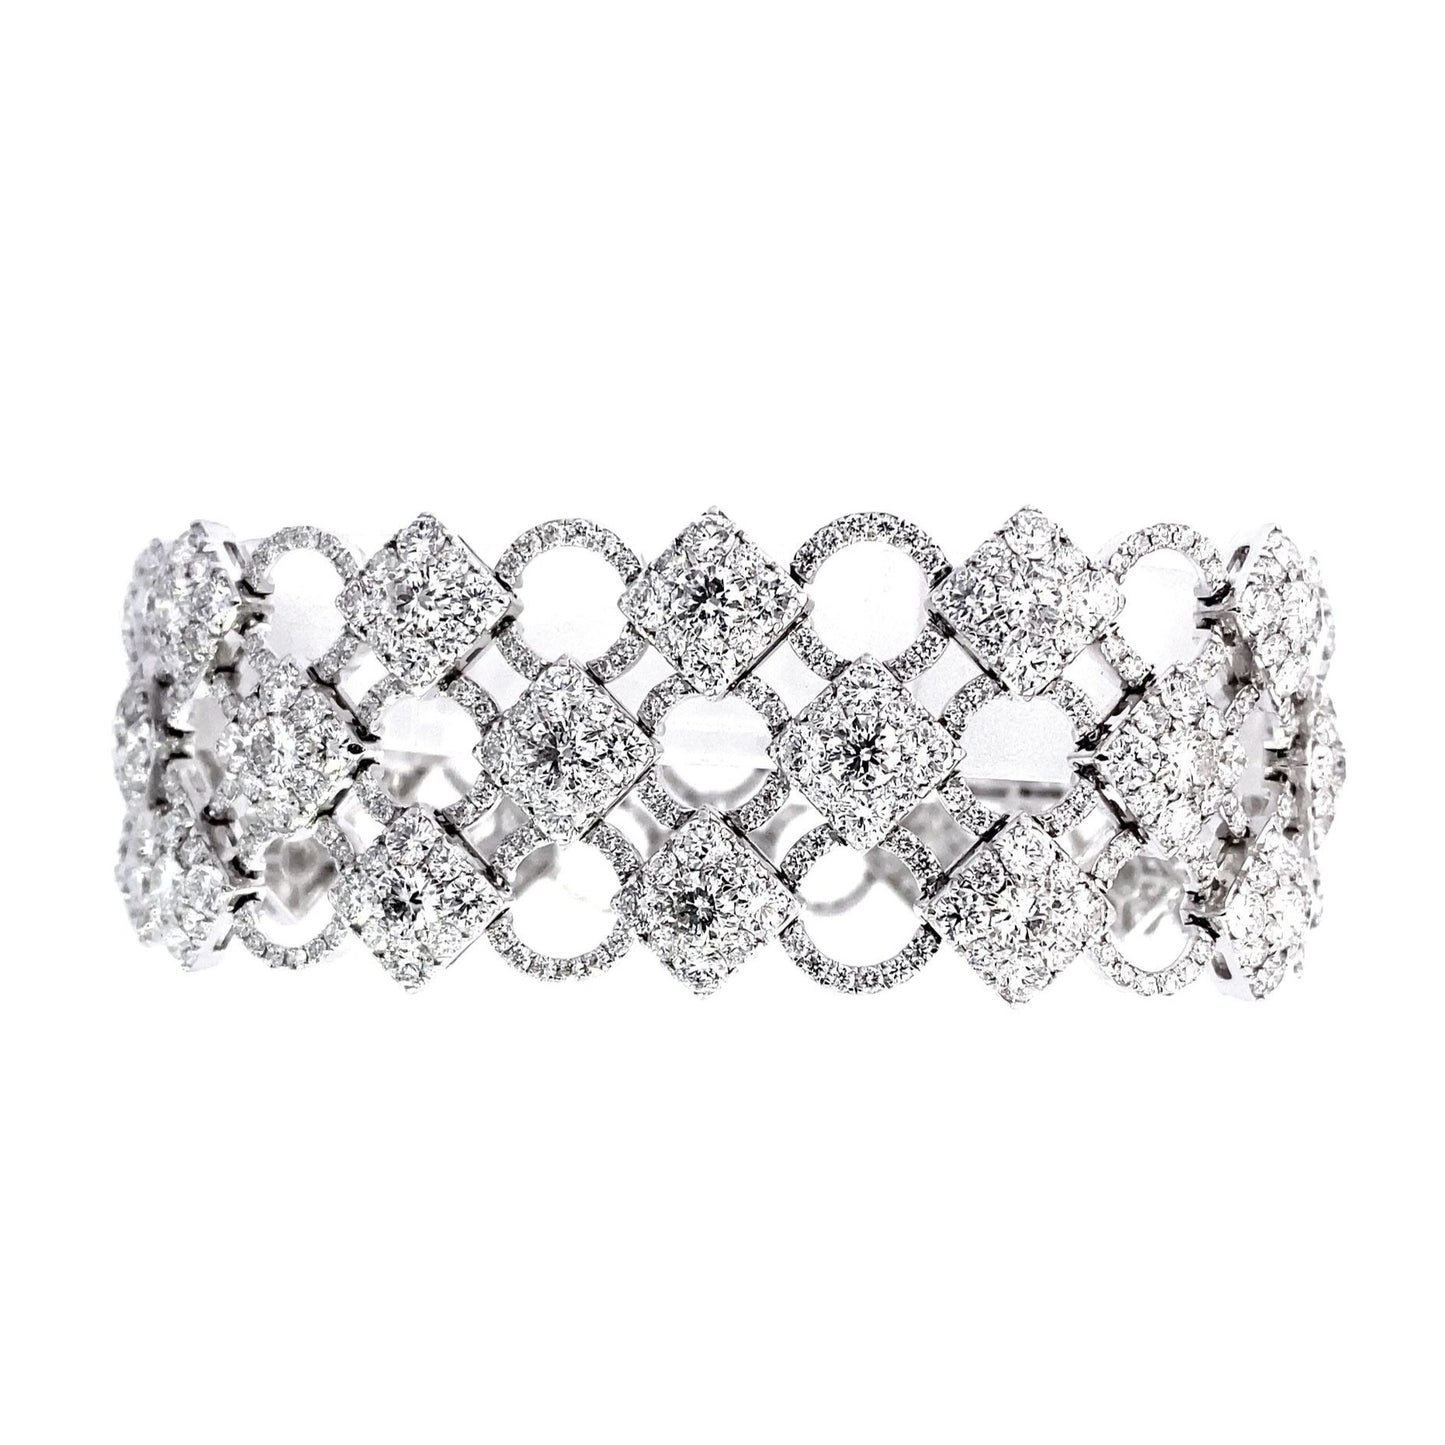 Stern International | 18K White Gold Diamond Bracelet